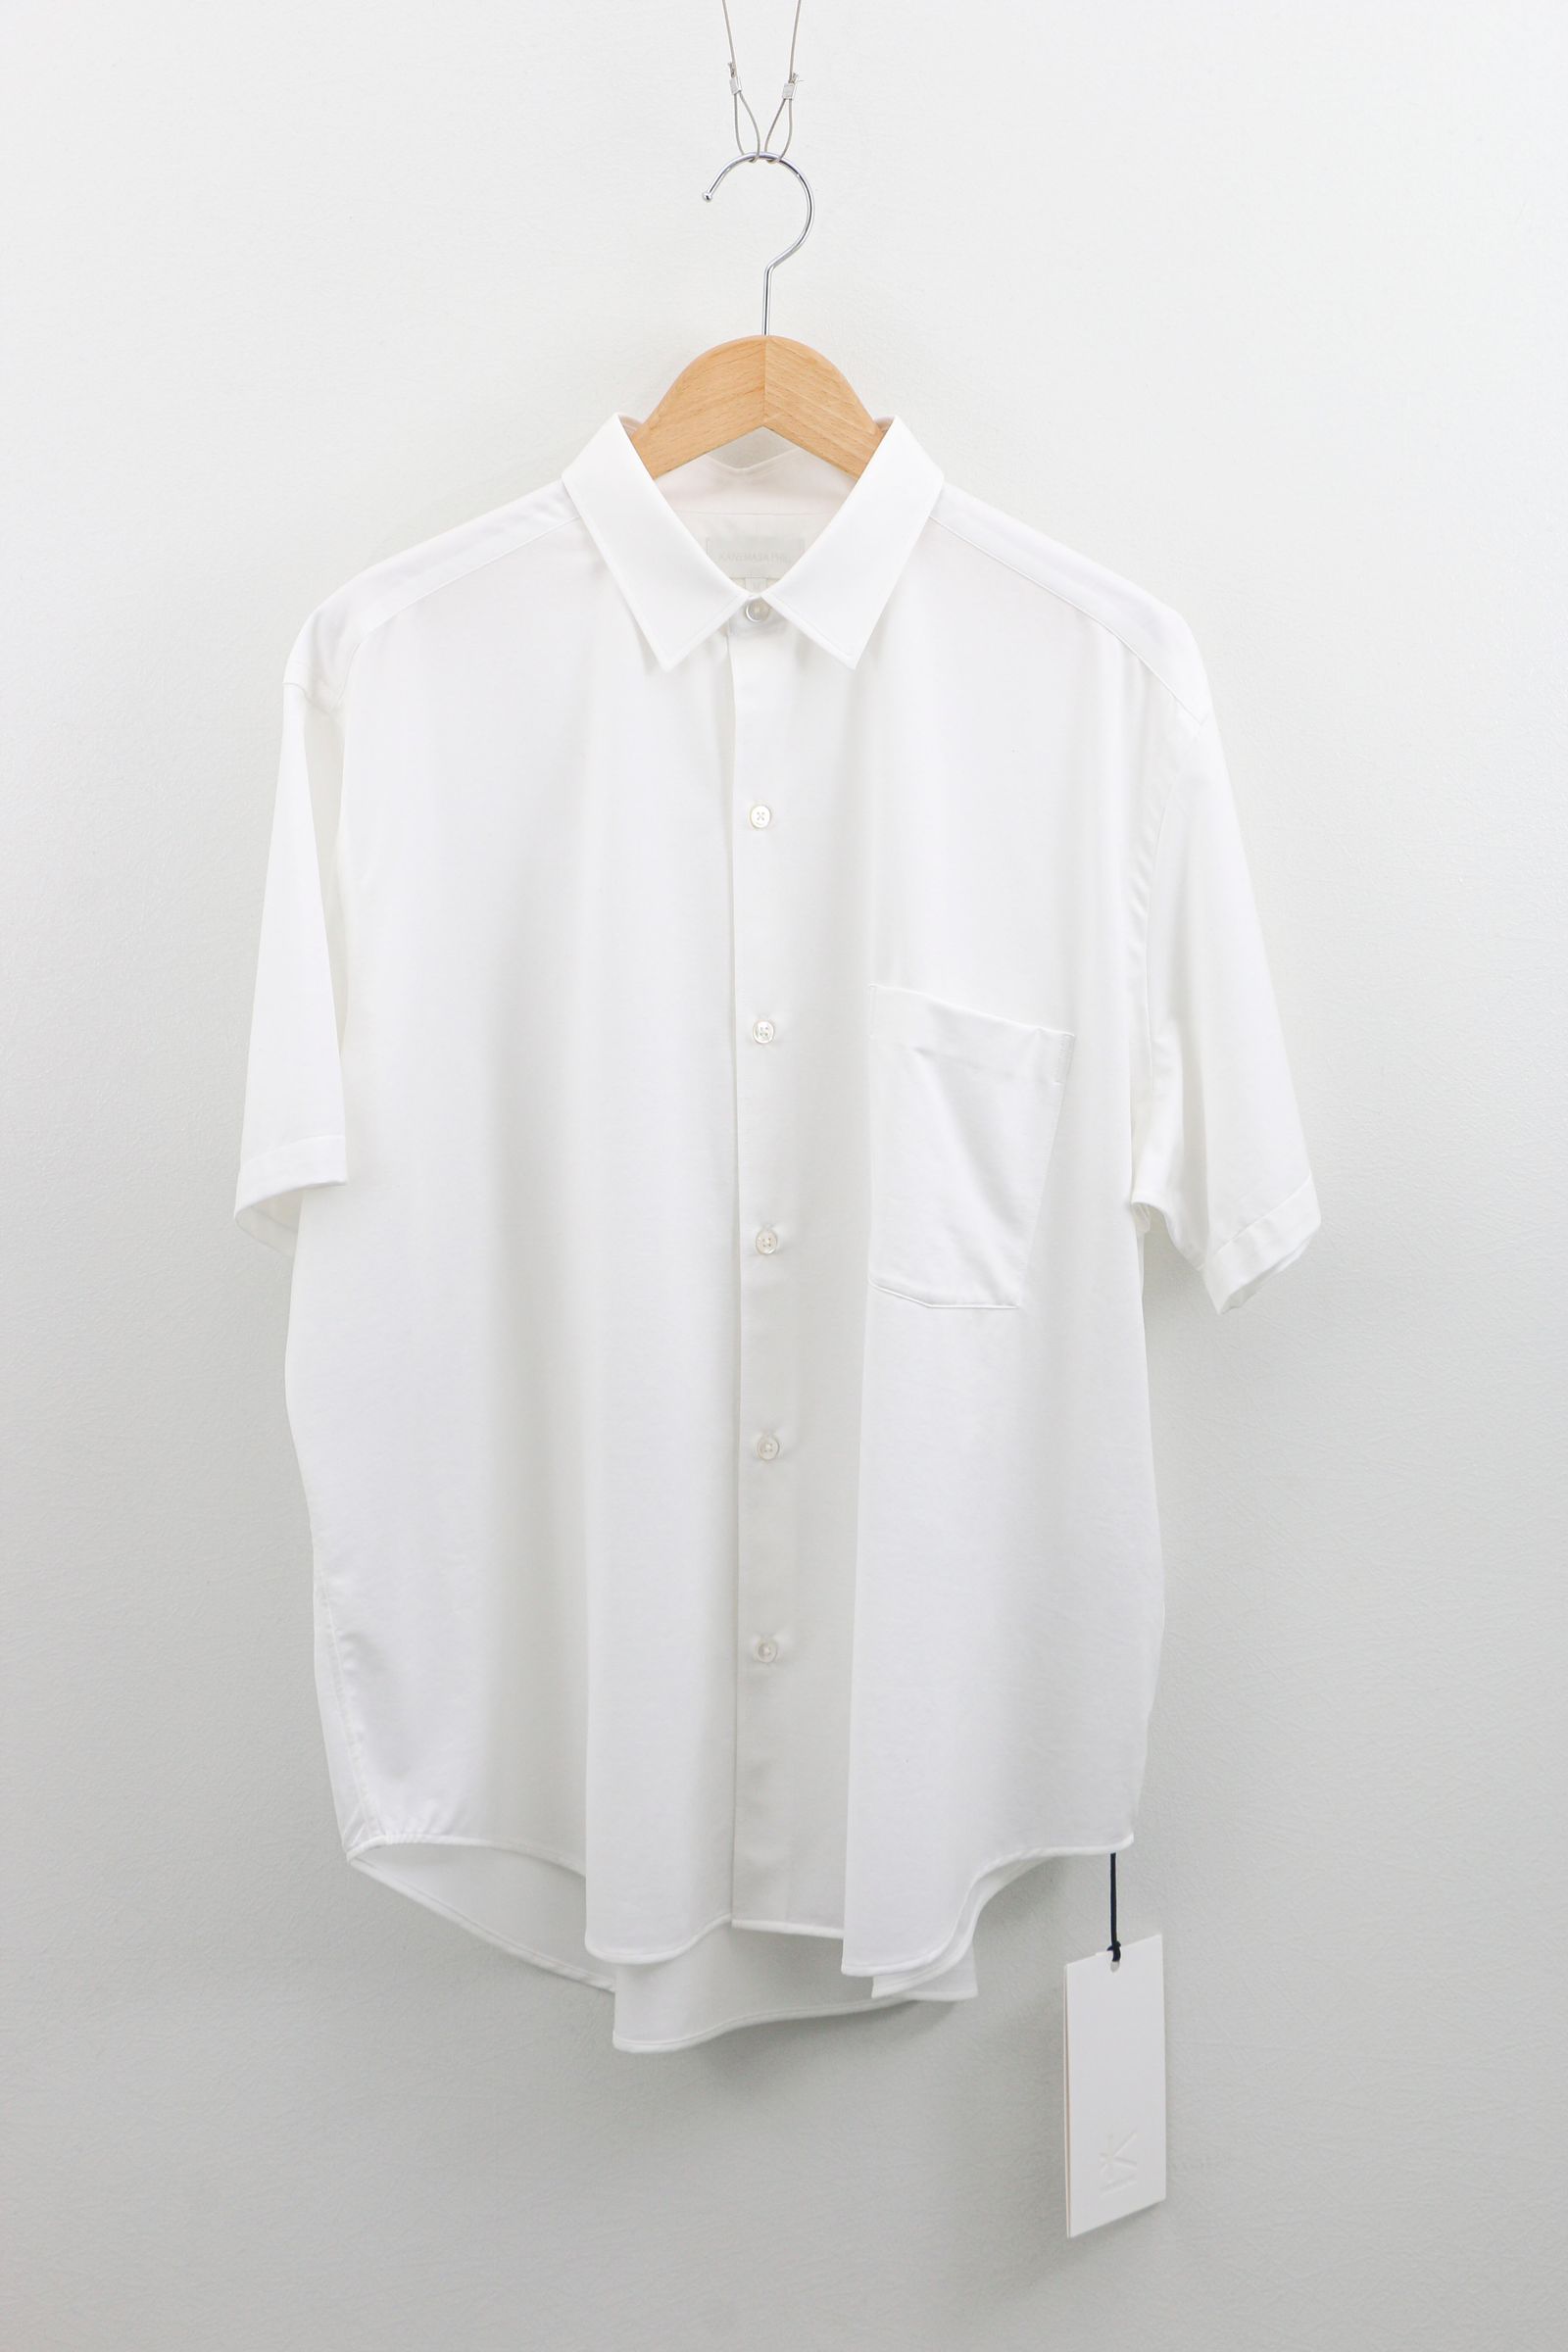 KANEMASA PHIL. - 46G Atmosphere SS Shirt WHITE / シャツ / ホワイト ...